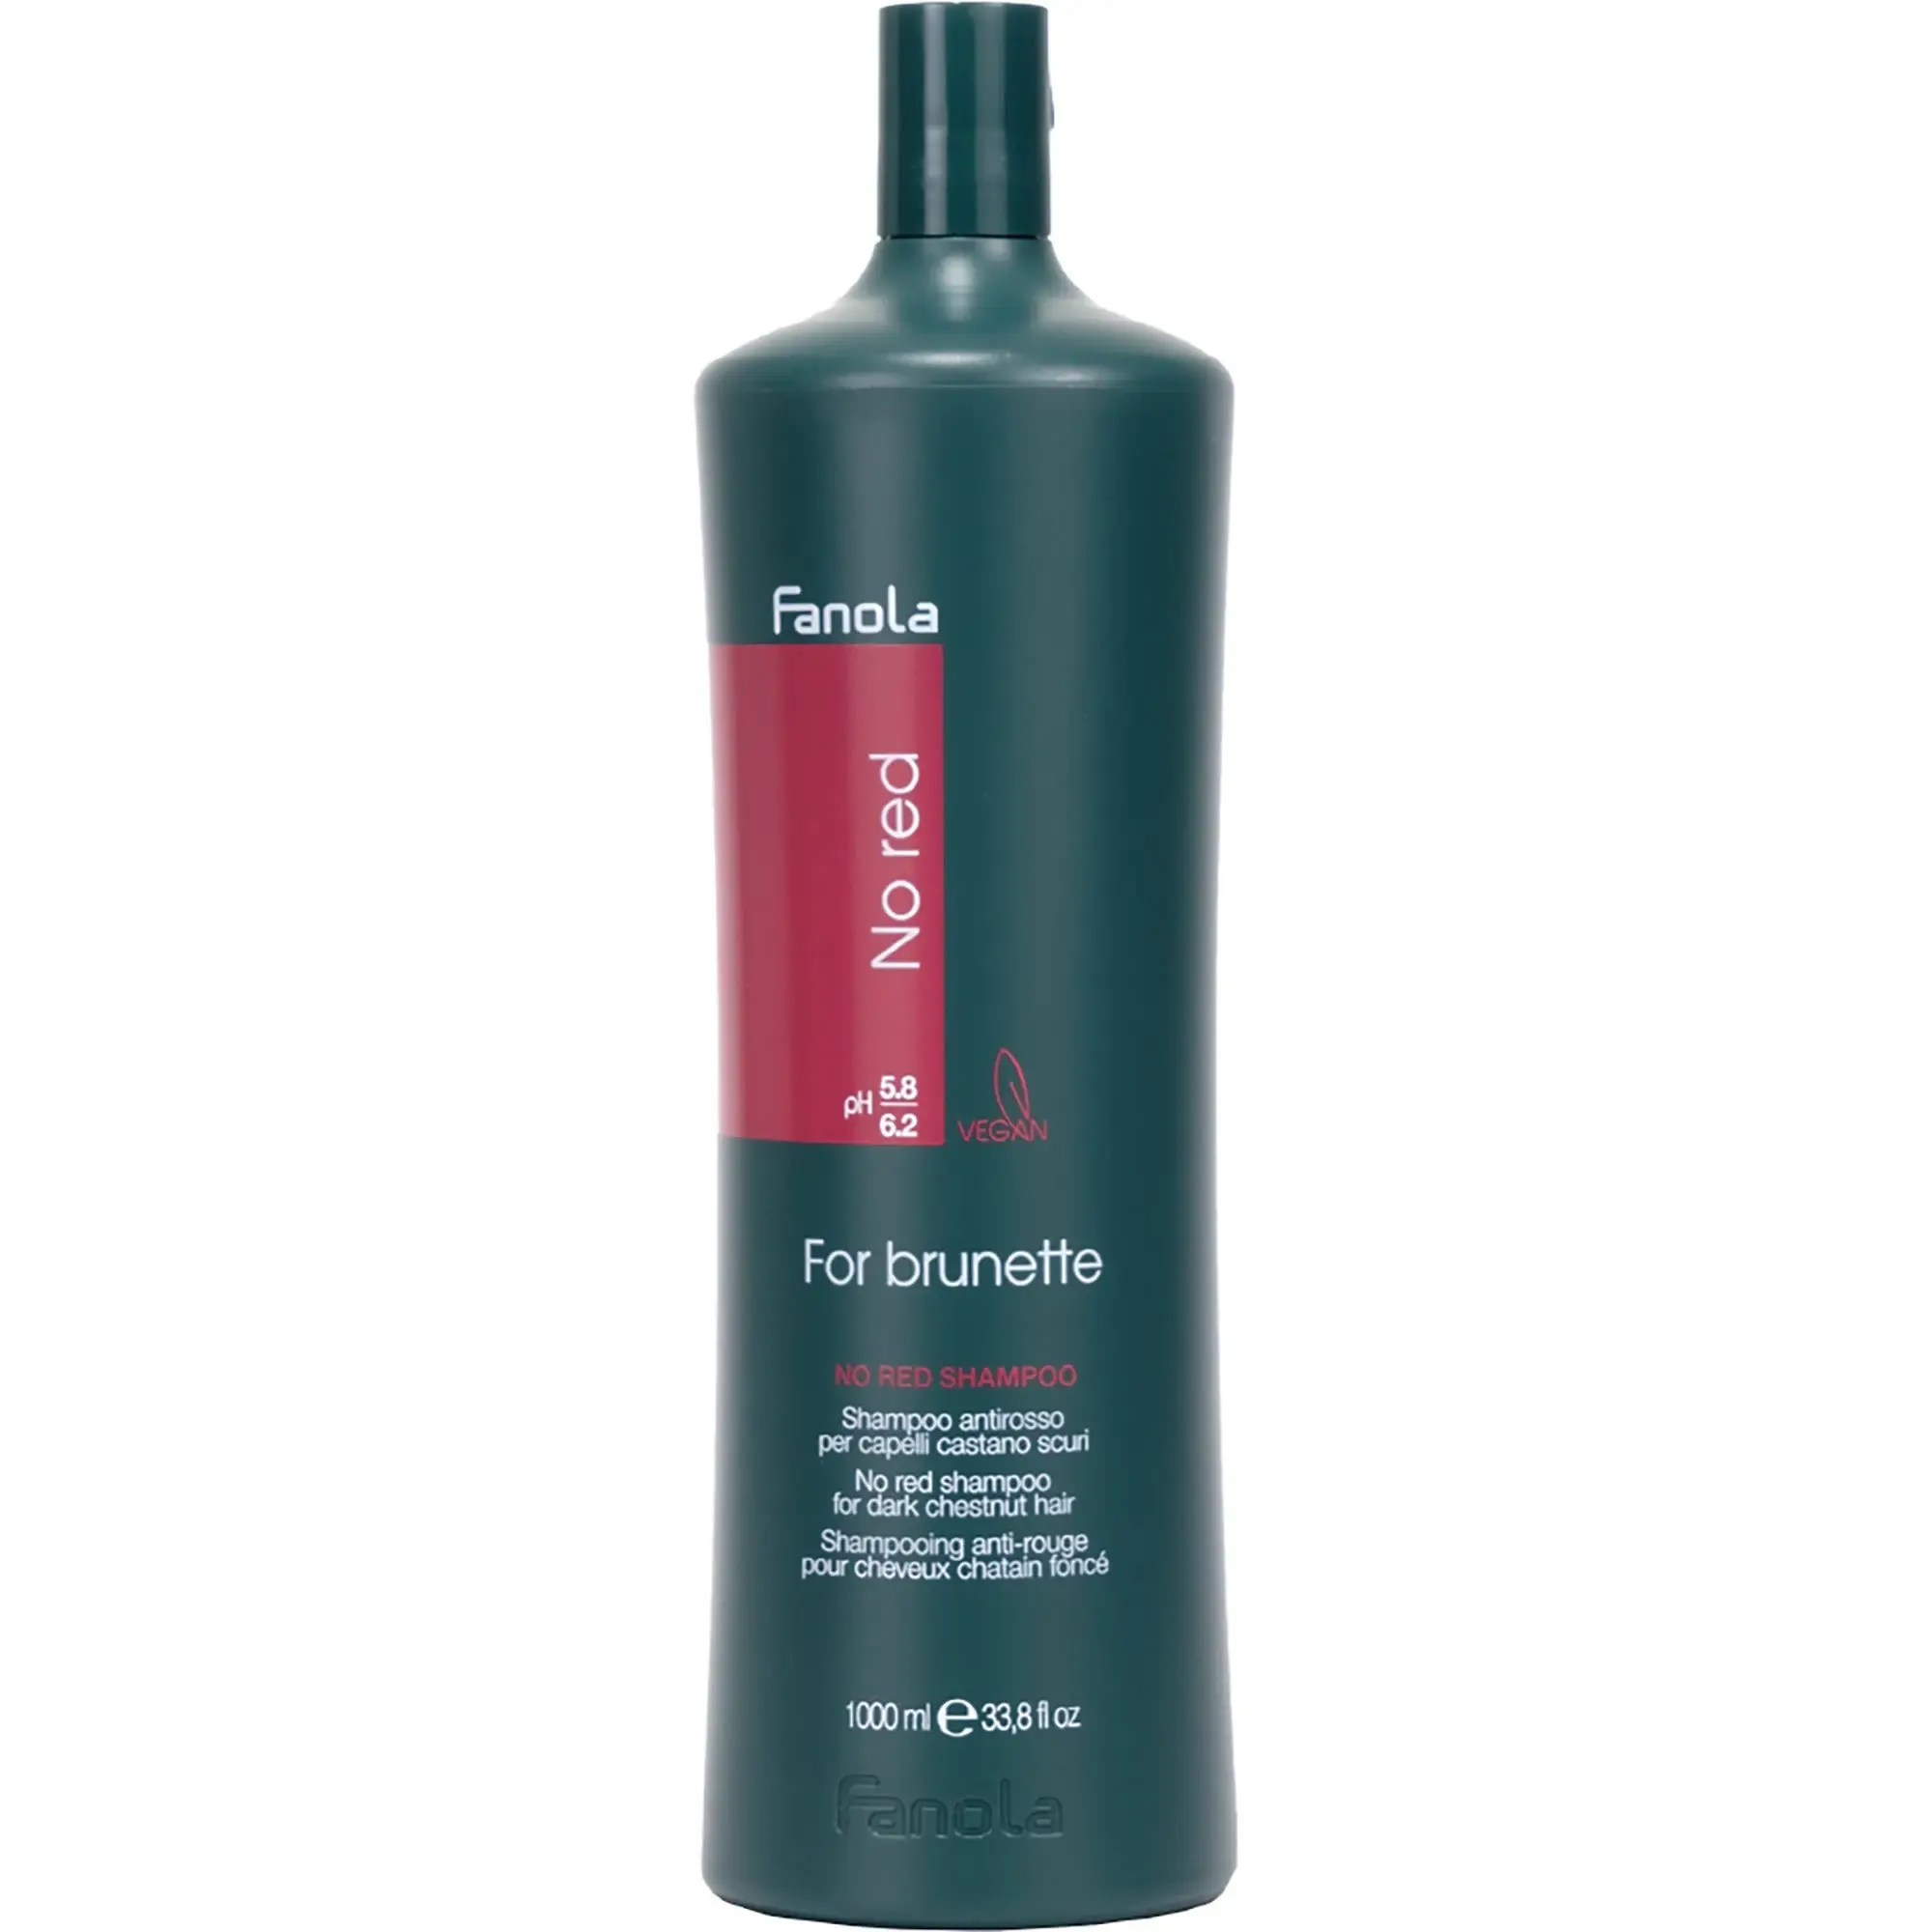 Fanola - No-Red Shampoo - 1000 ml